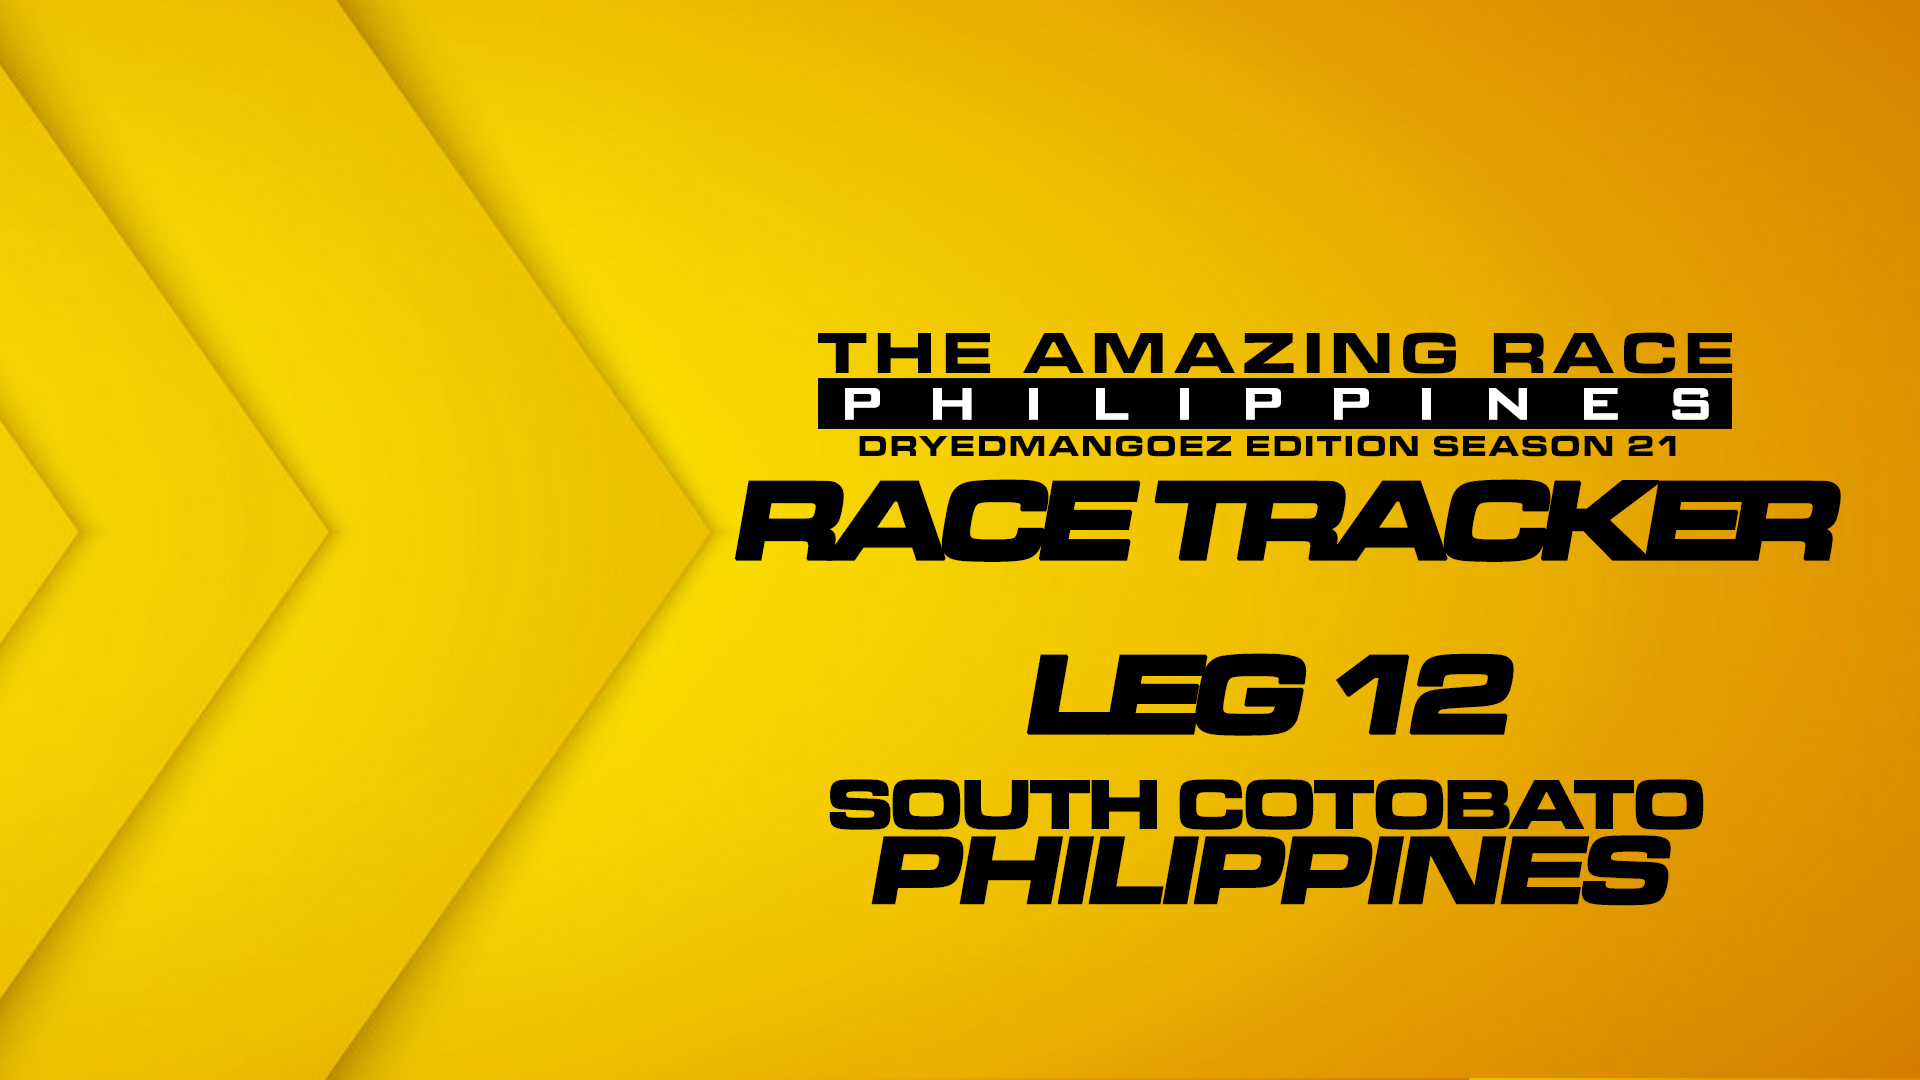 The Amazing Race Philippines: DryedMangoez Edition Season 21 Race Tracker – Leg 12